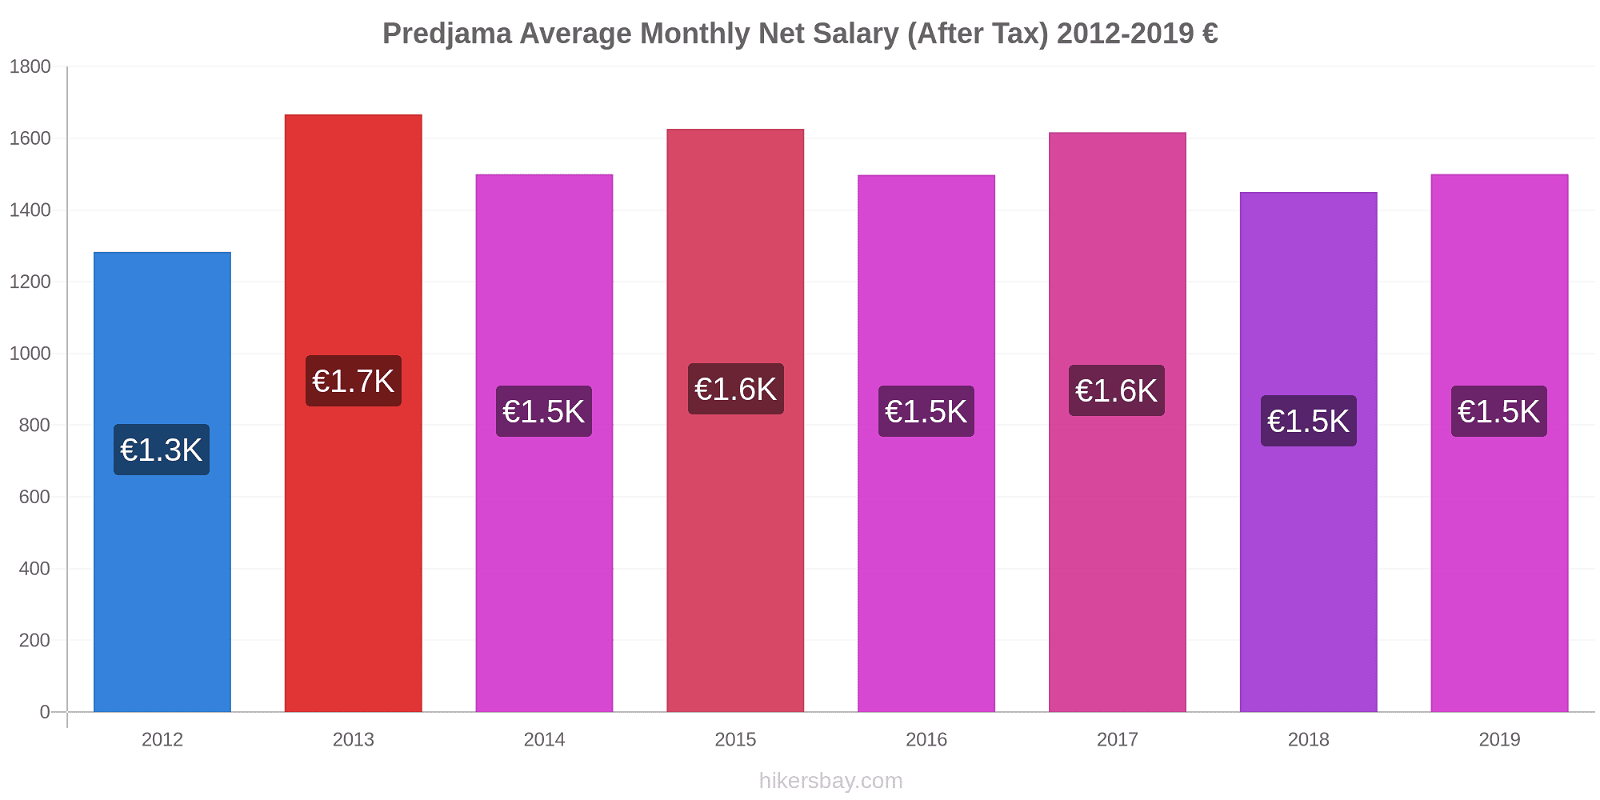 Predjama price changes Average Monthly Net Salary (After Tax) hikersbay.com